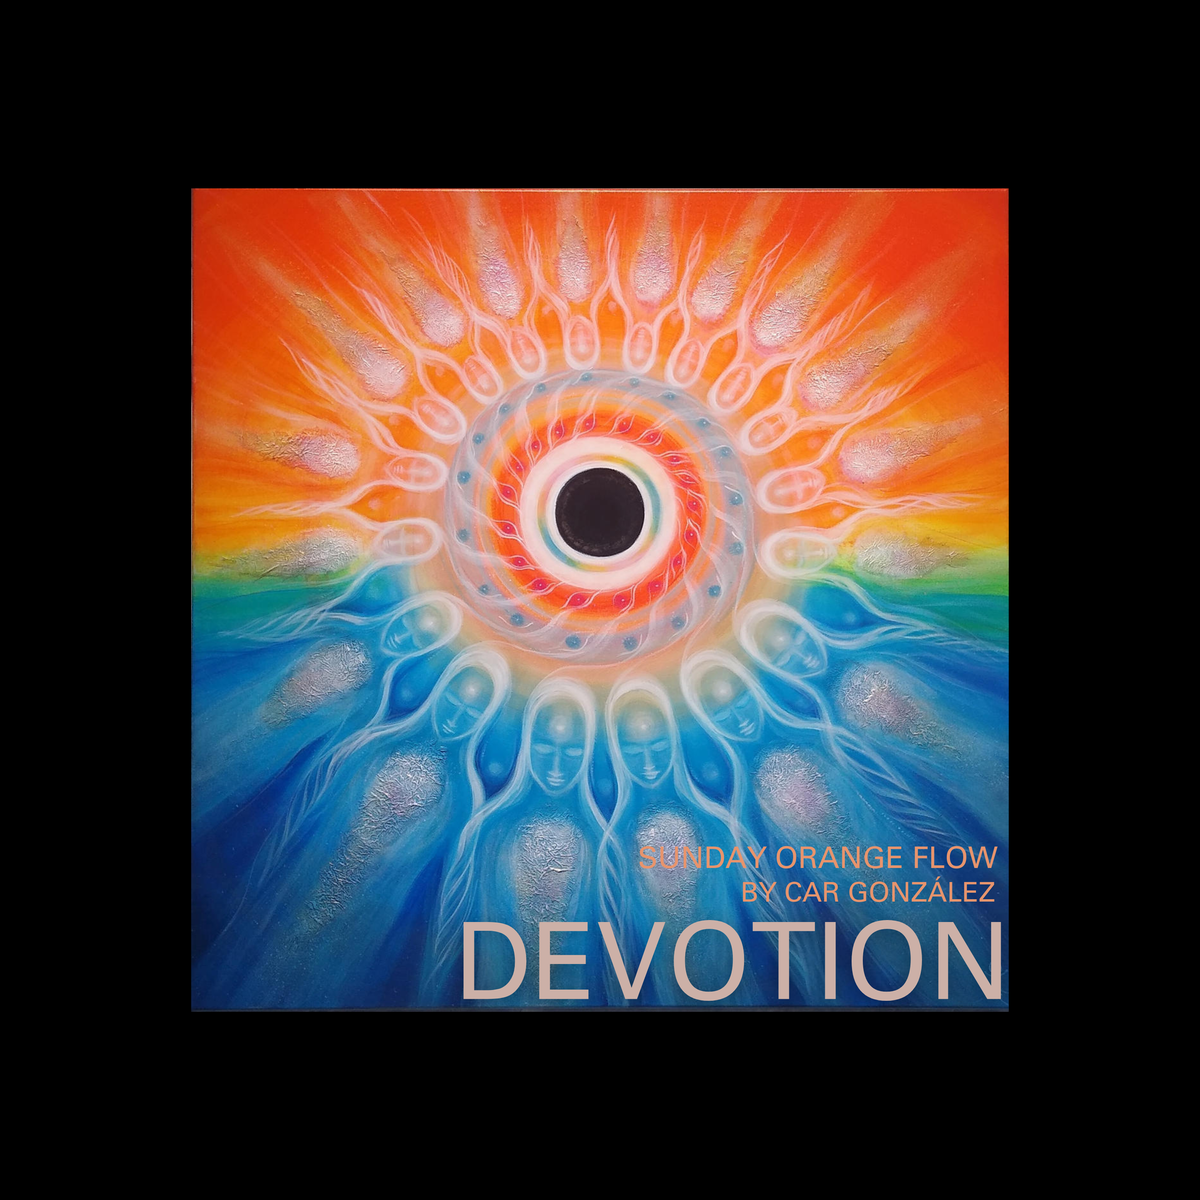 Devotion - Sunday Orange Flow